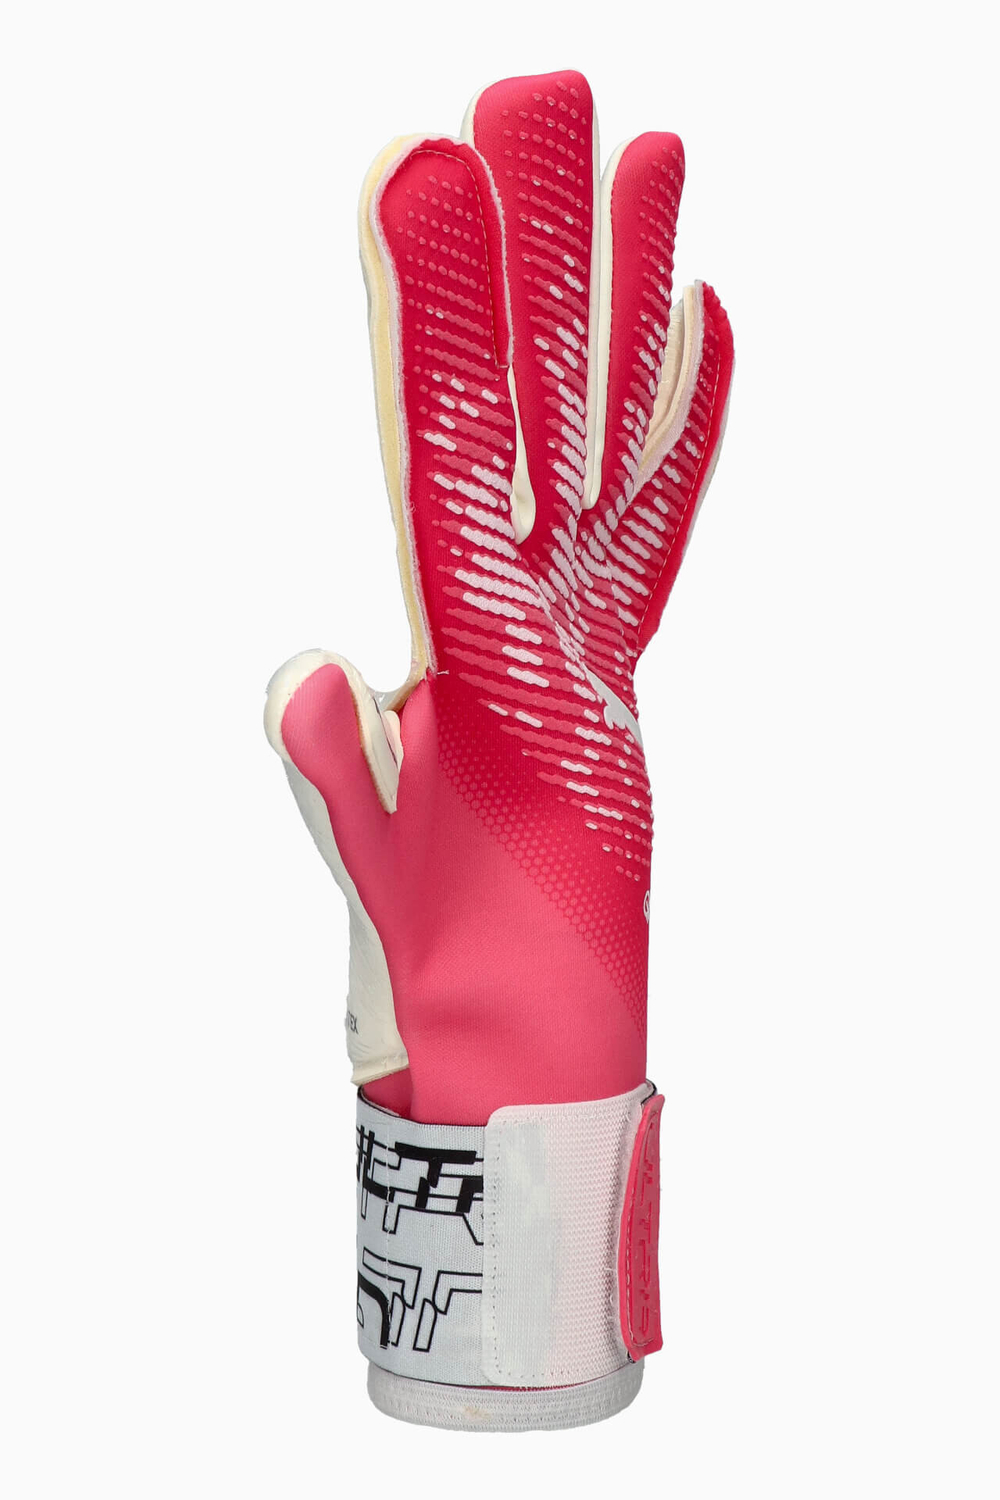 Вратарские перчатки Puma Ultra Grip 1 Hybrid